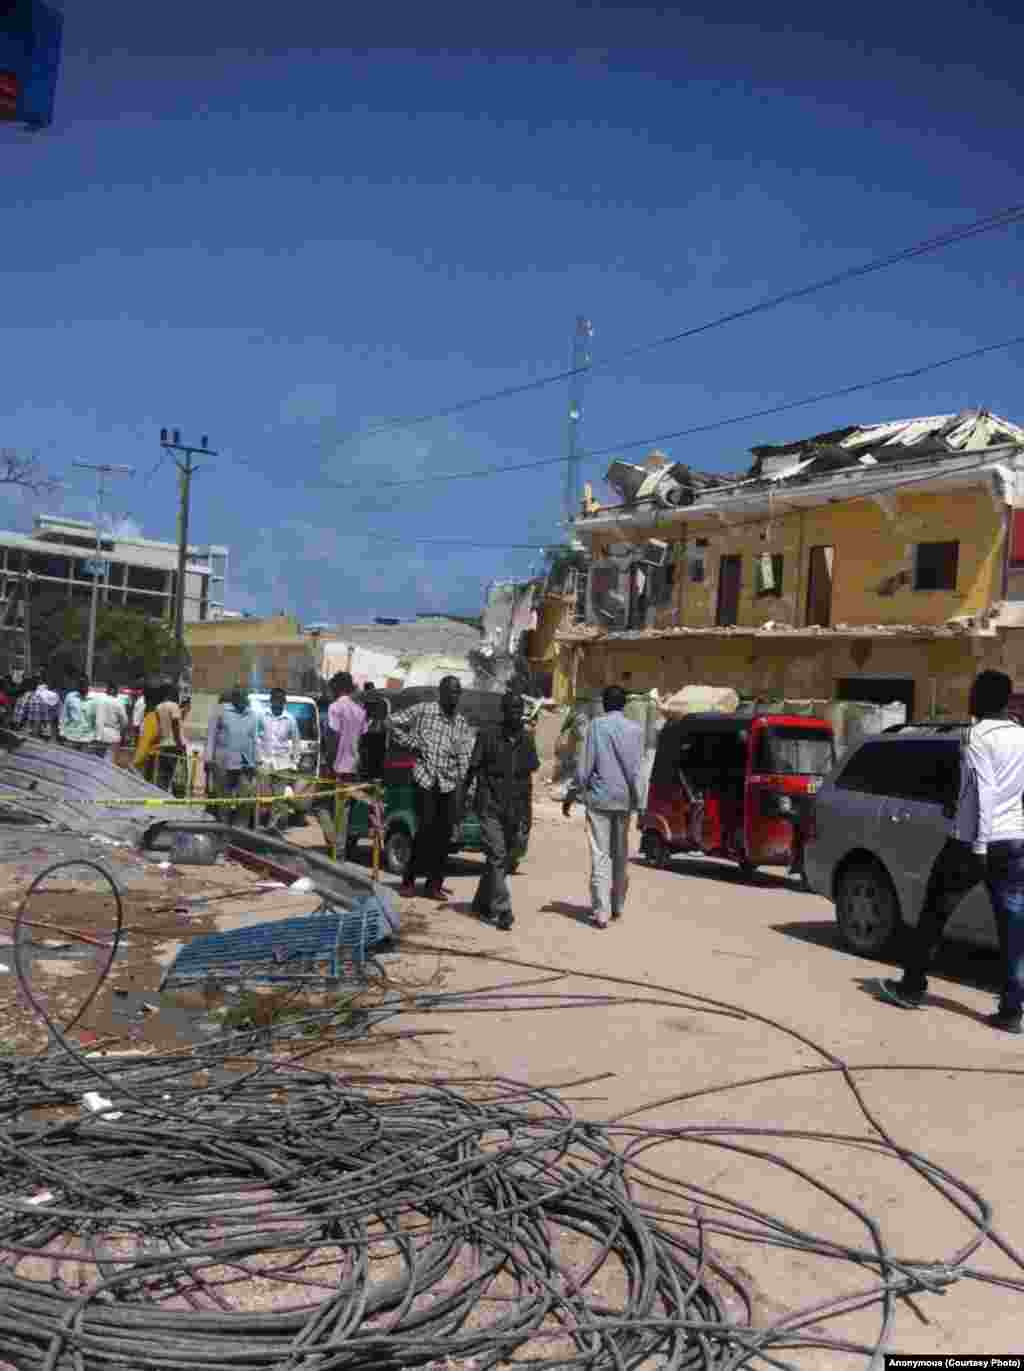 Somalis walk around the neighborhood of the destroyed Naso Hanlod hotel.